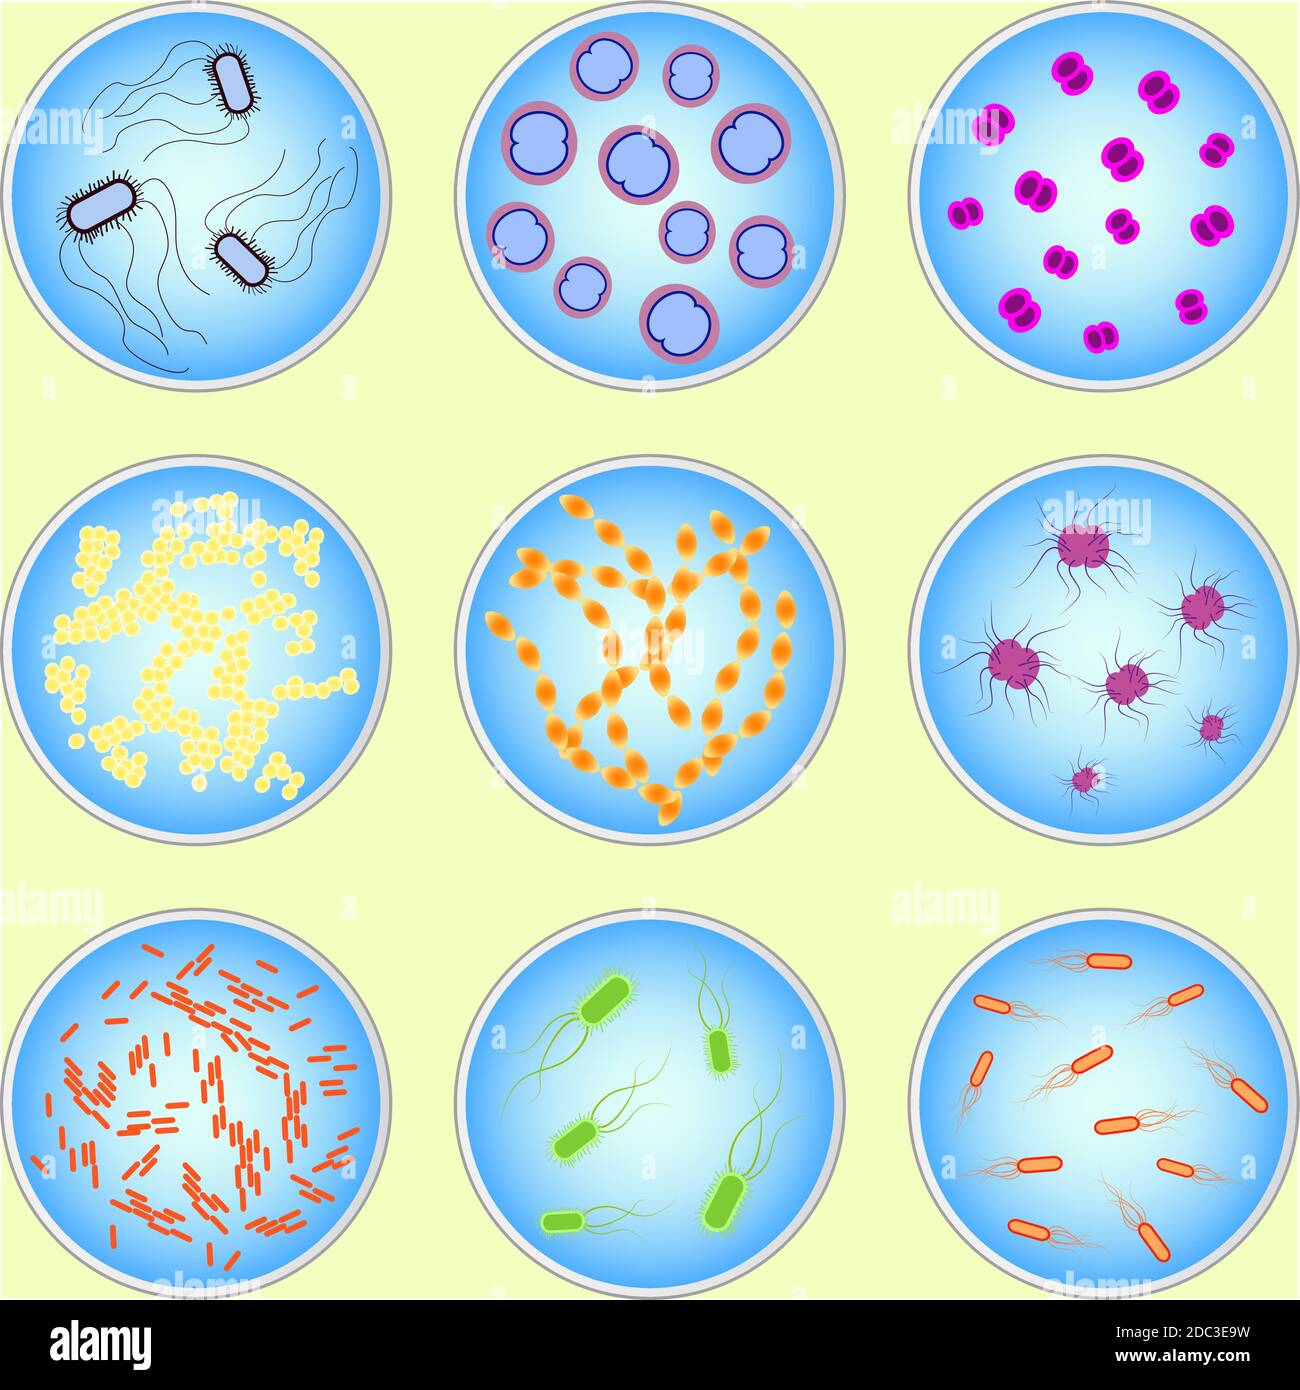 three types of bacteria